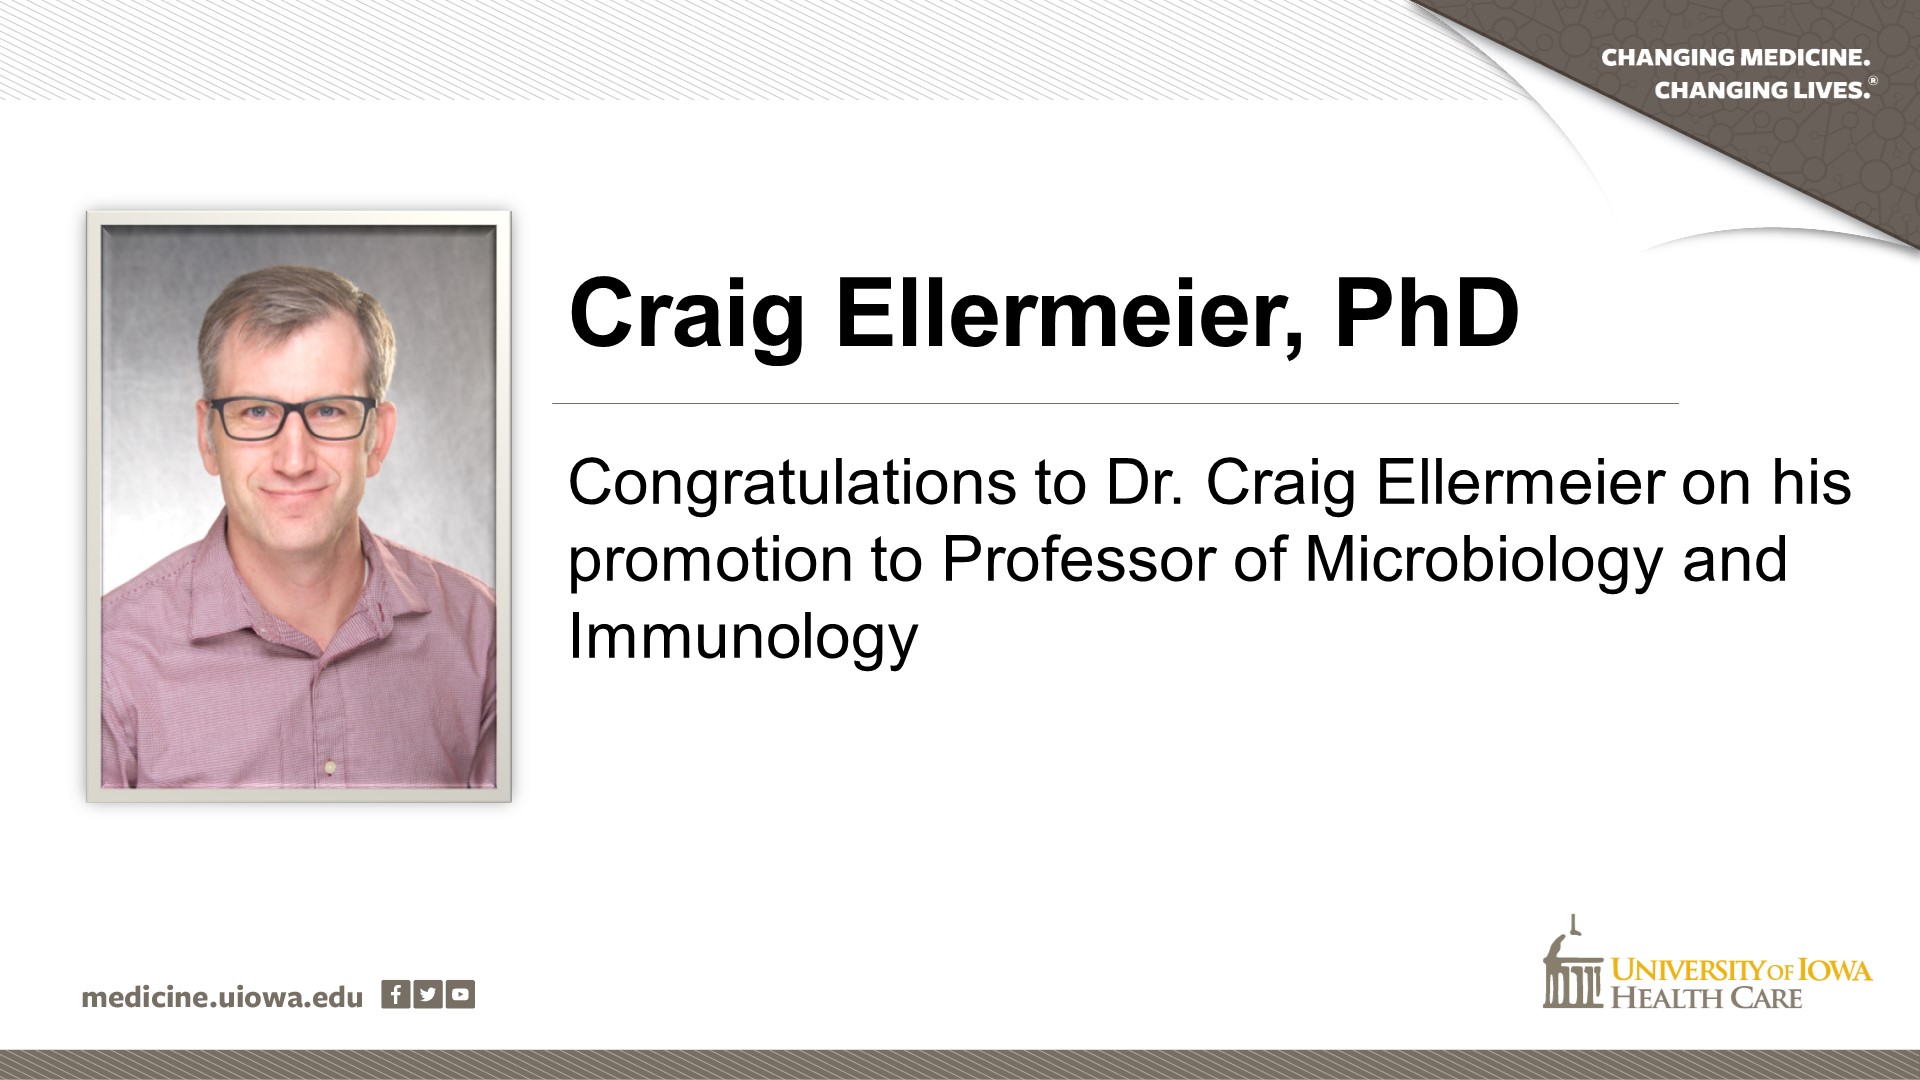 Dr. Craig Ellermeier to Professor of Microbiology and Immunology